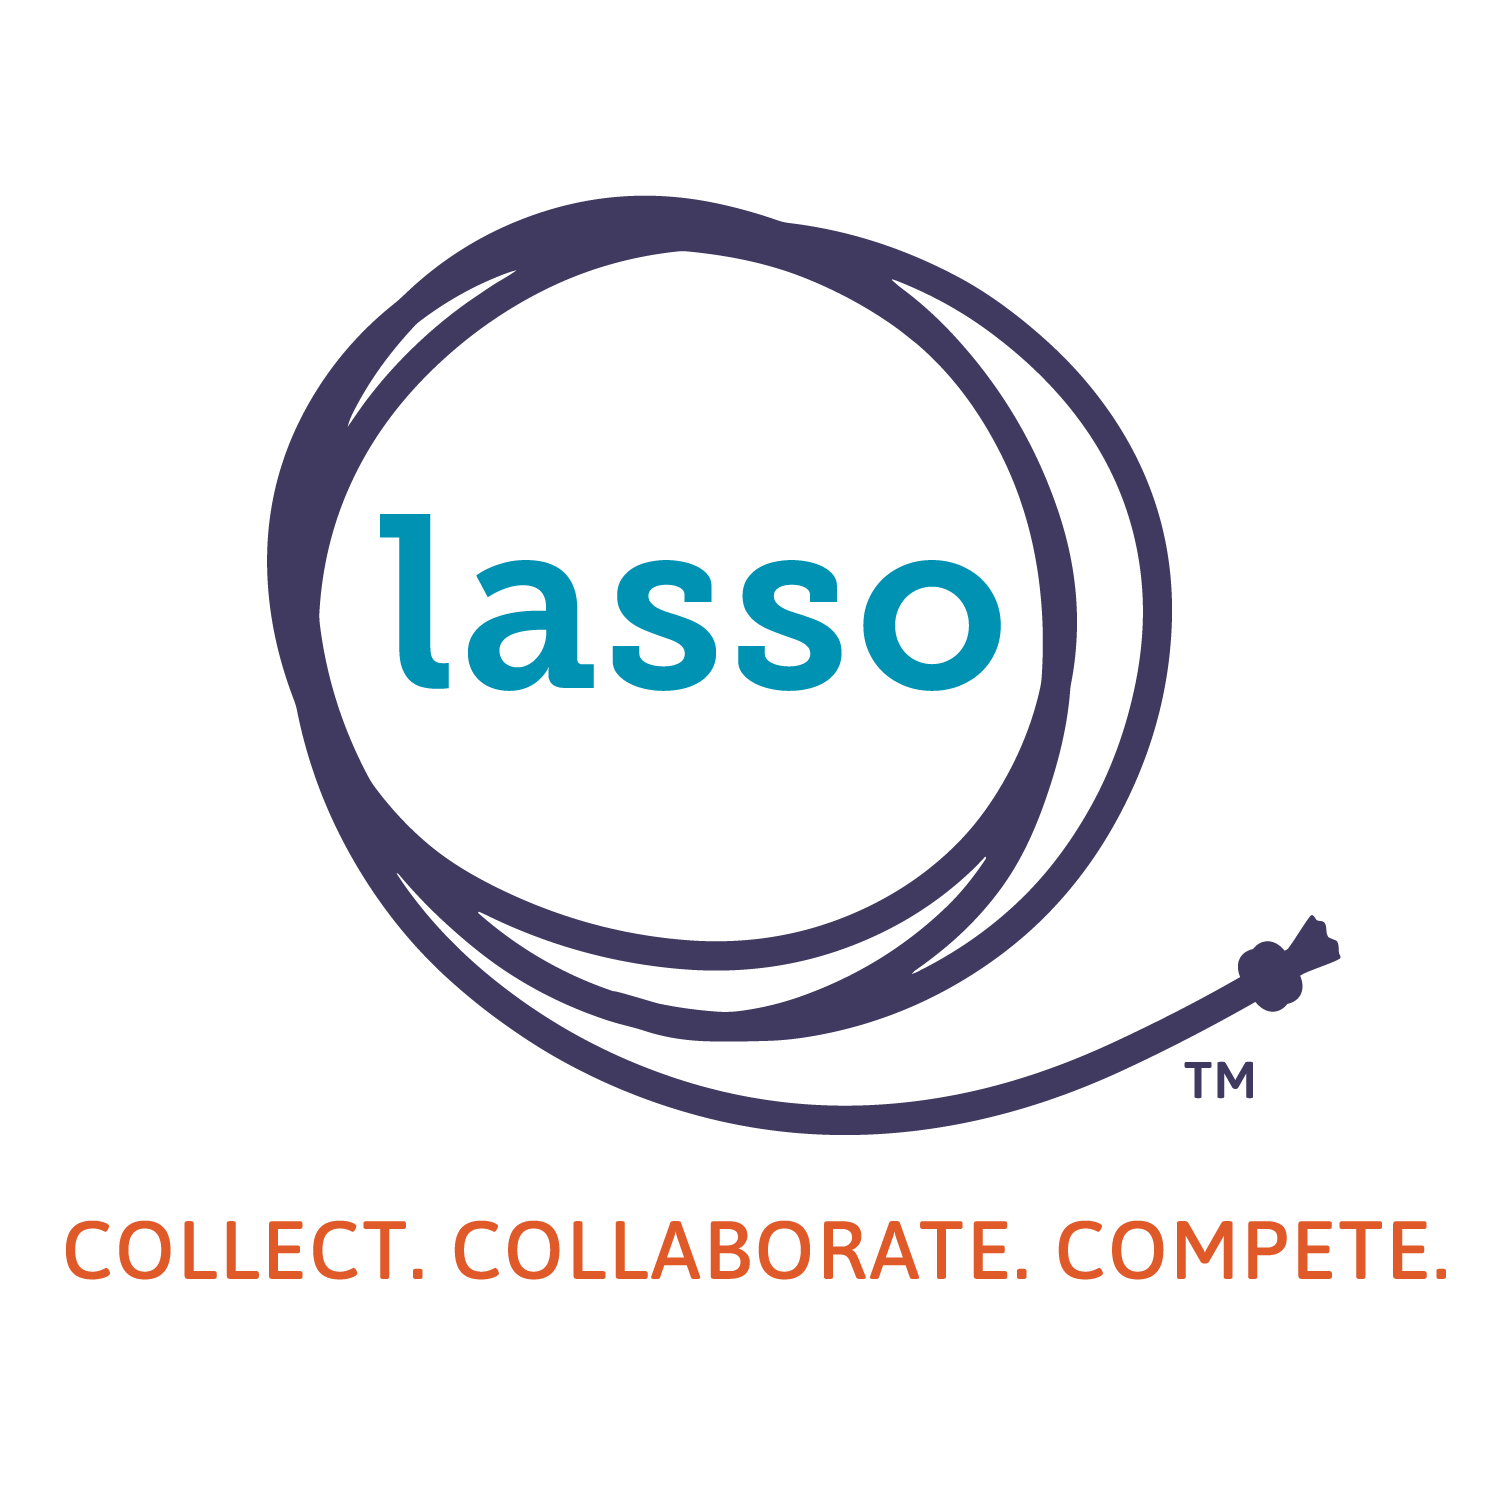 Lasso — candid marketing